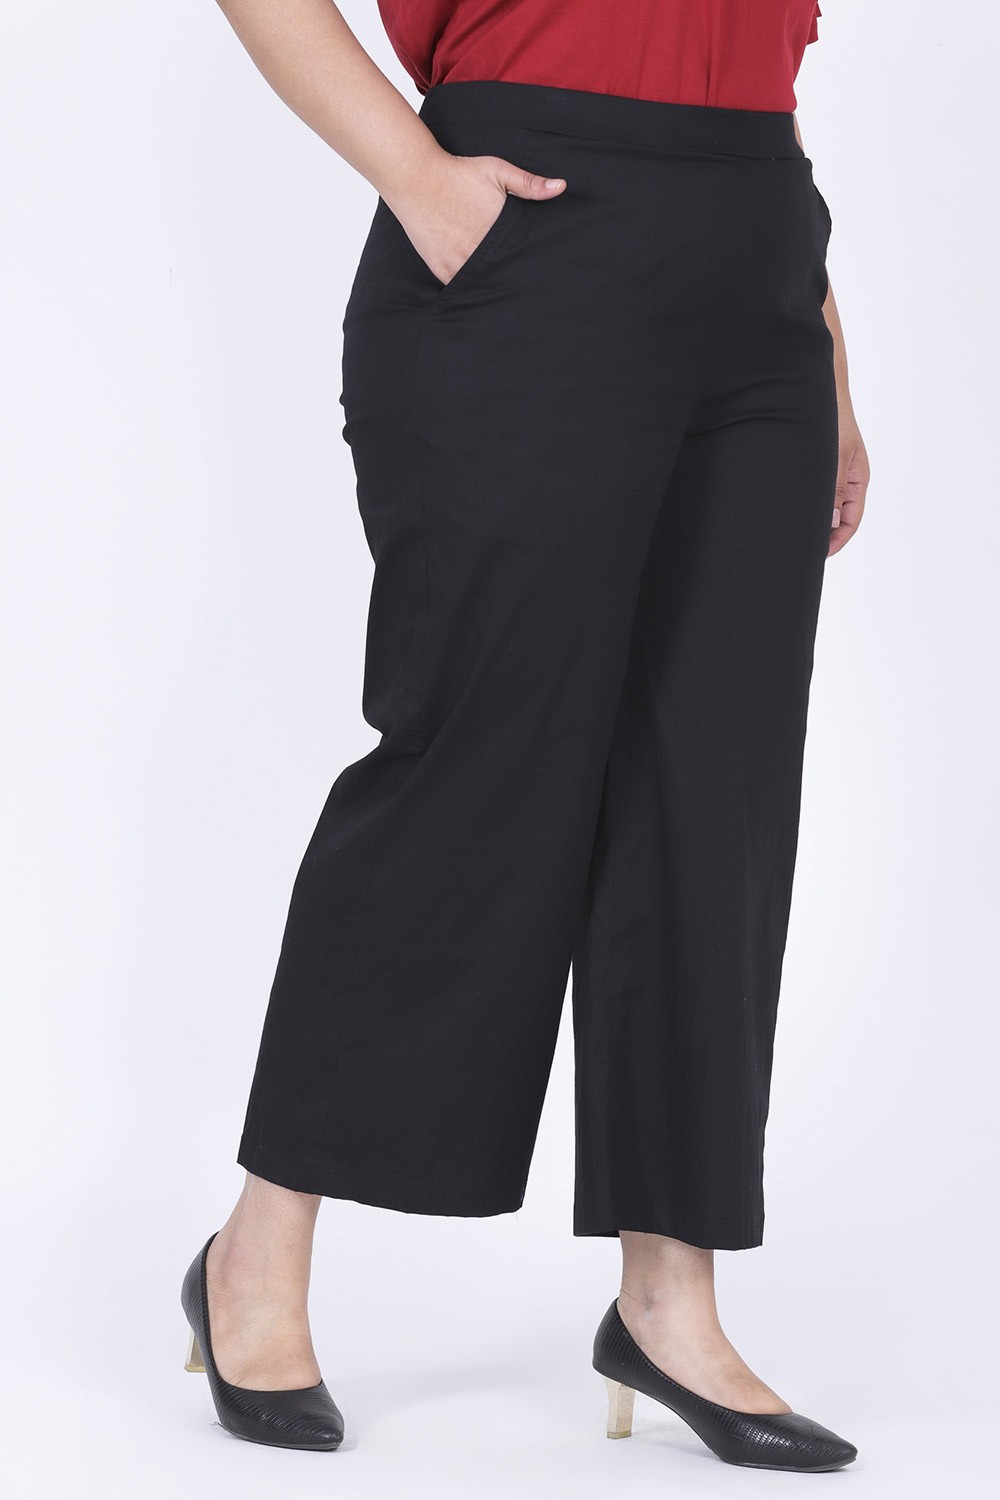 LASTINCH Regular Fit Women Black Trousers - Buy LASTINCH Regular